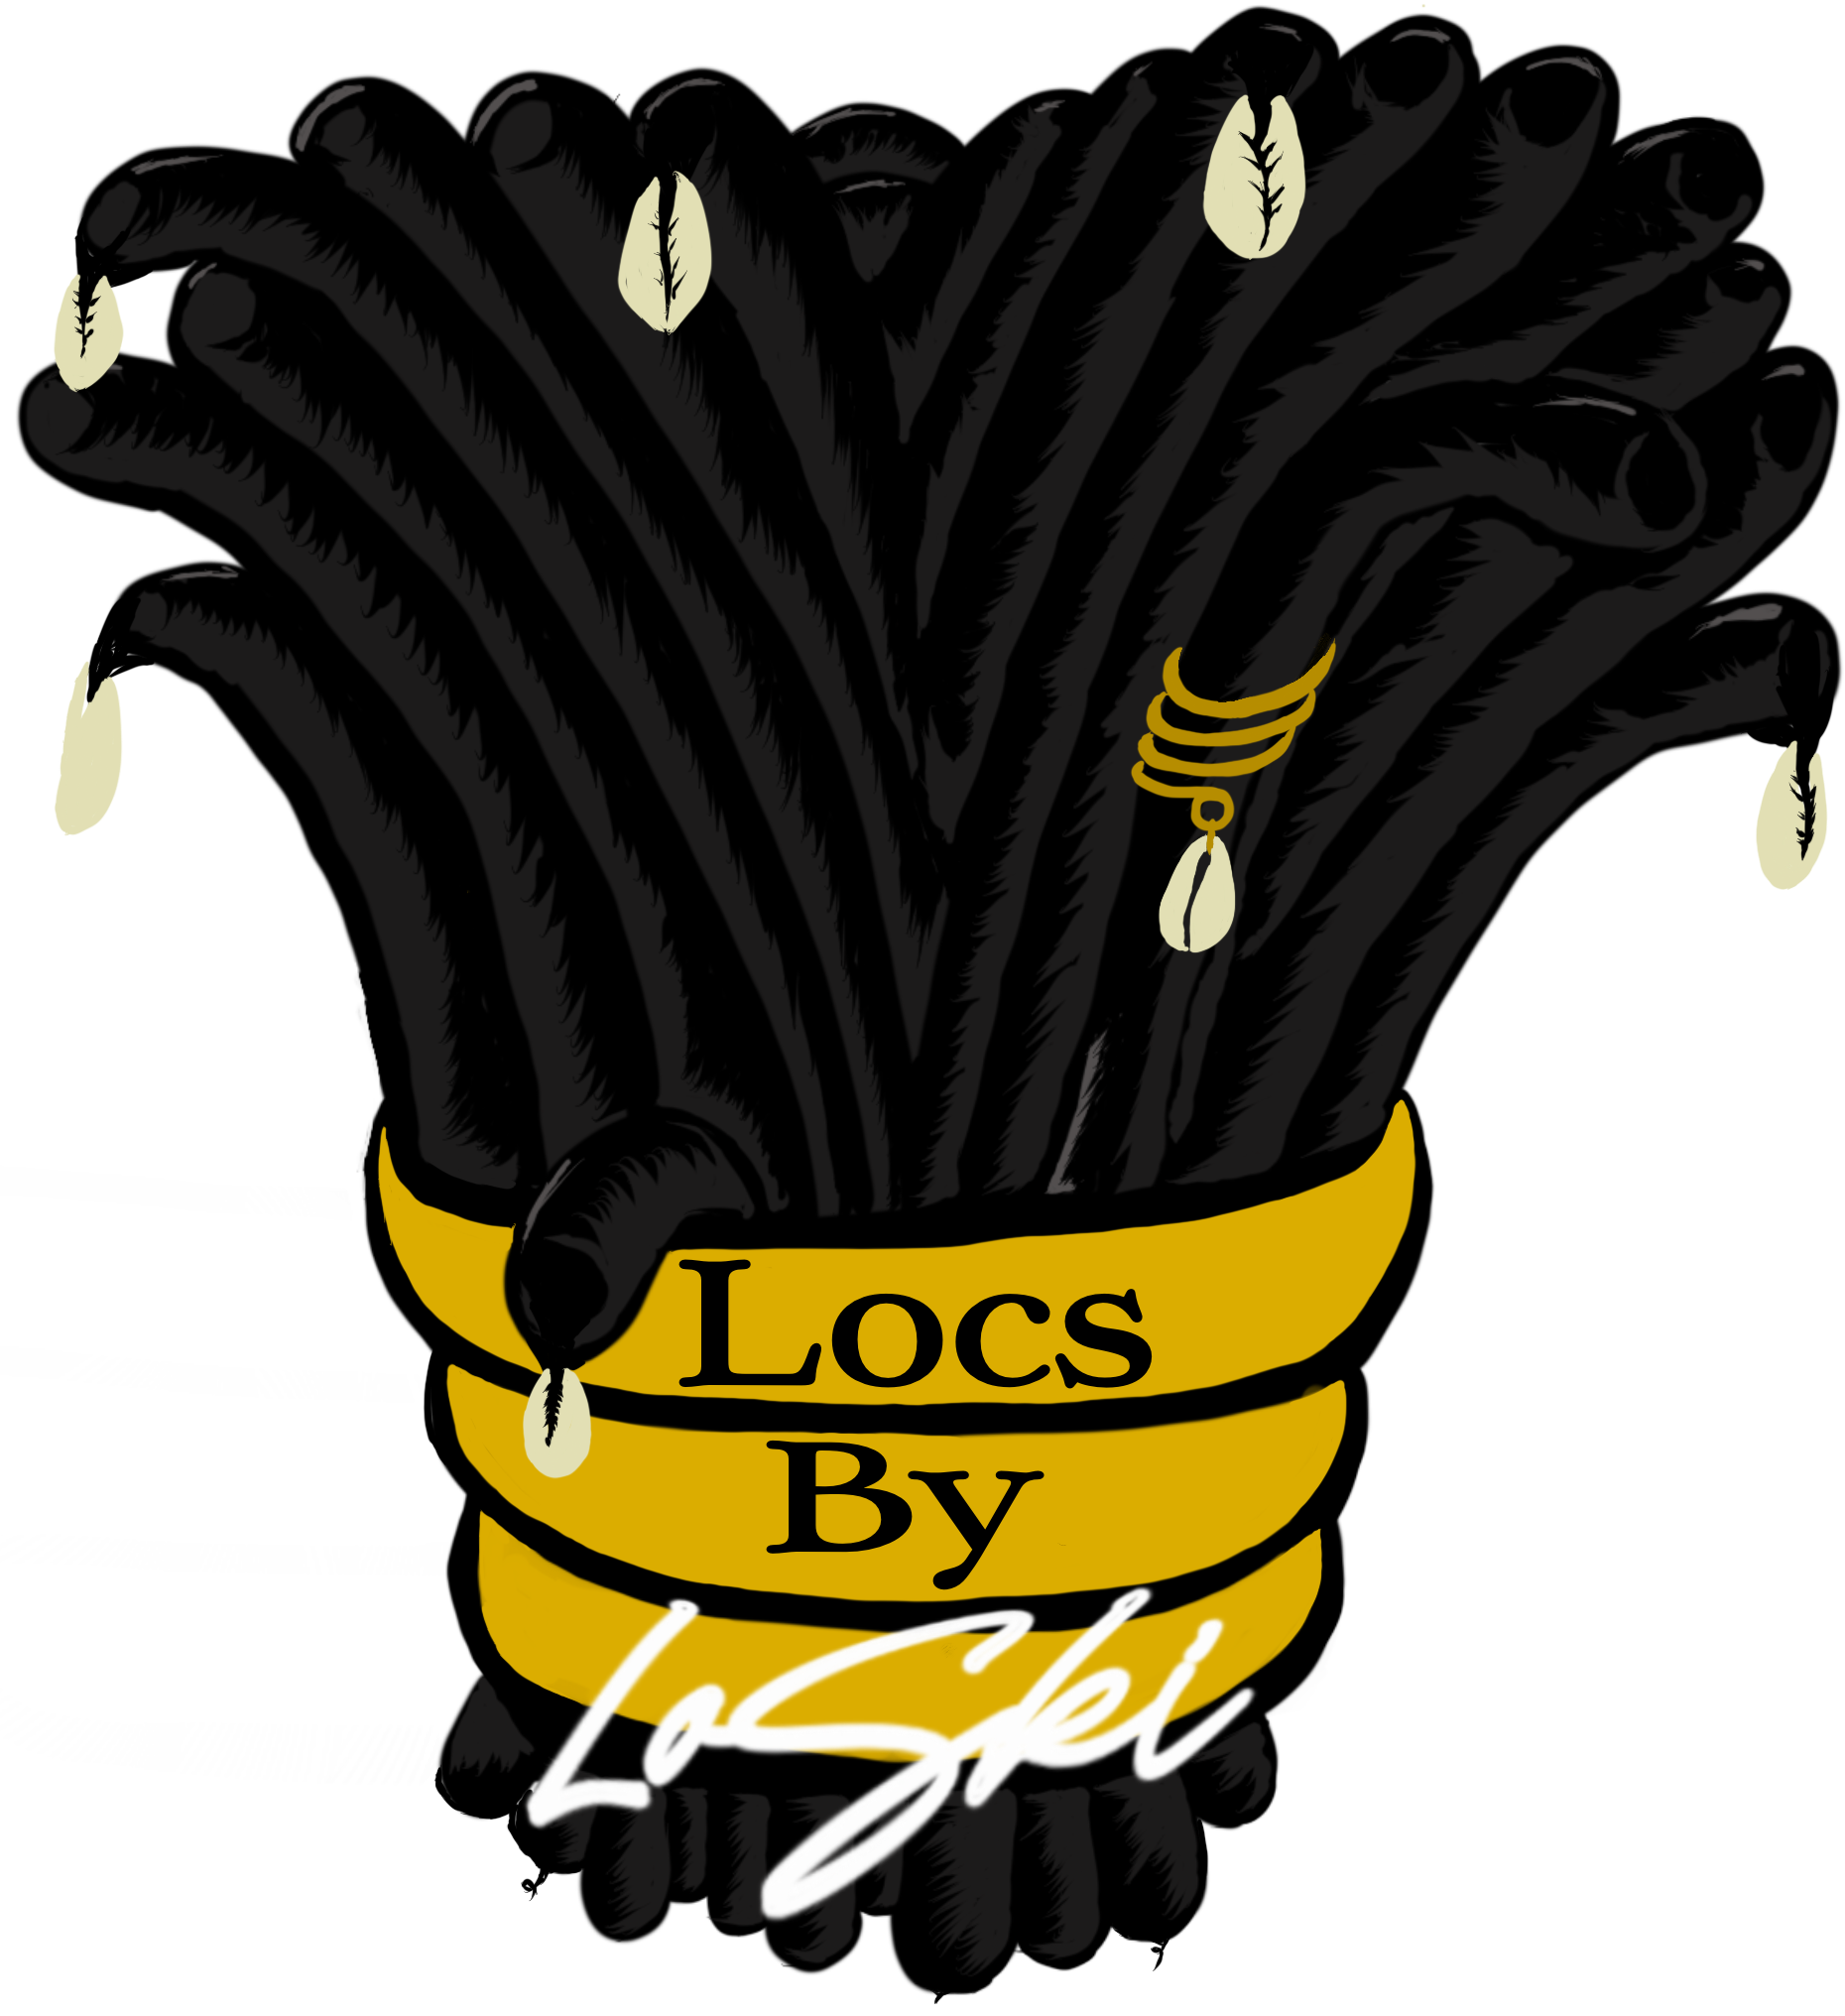 Locs By LoSki